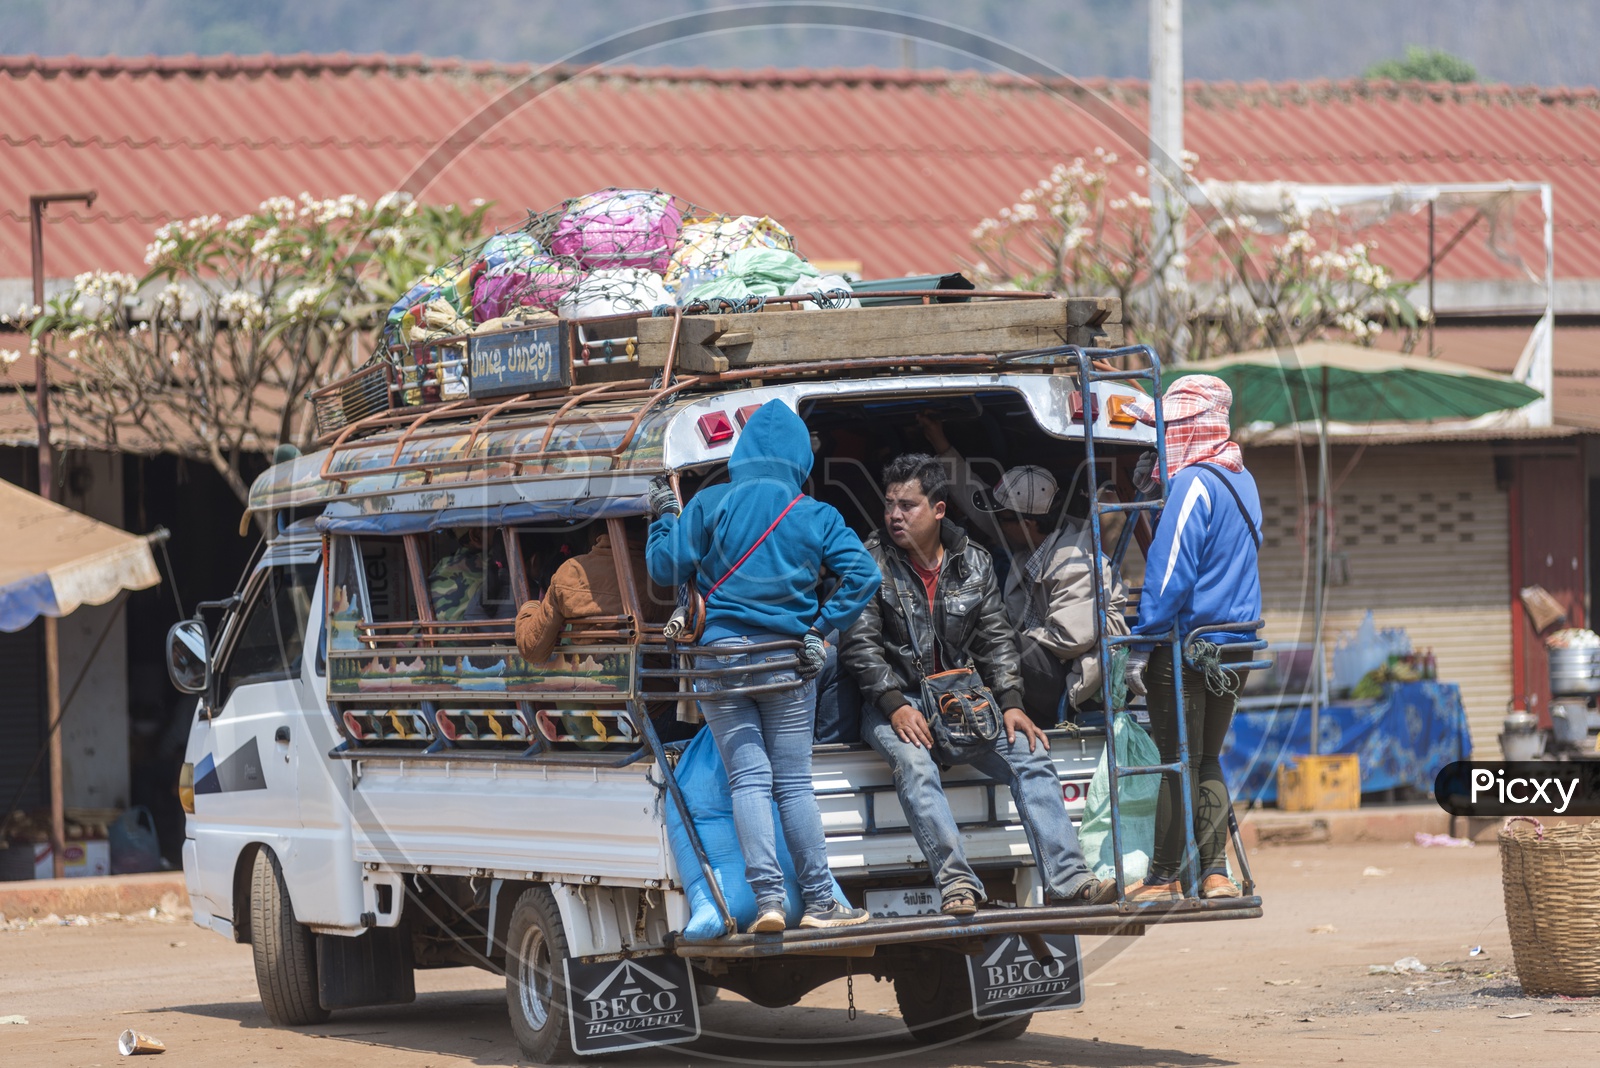 Busy Luang Prabang Morning Market With Public Commuting Jeeps  in  luang prabang Laos.